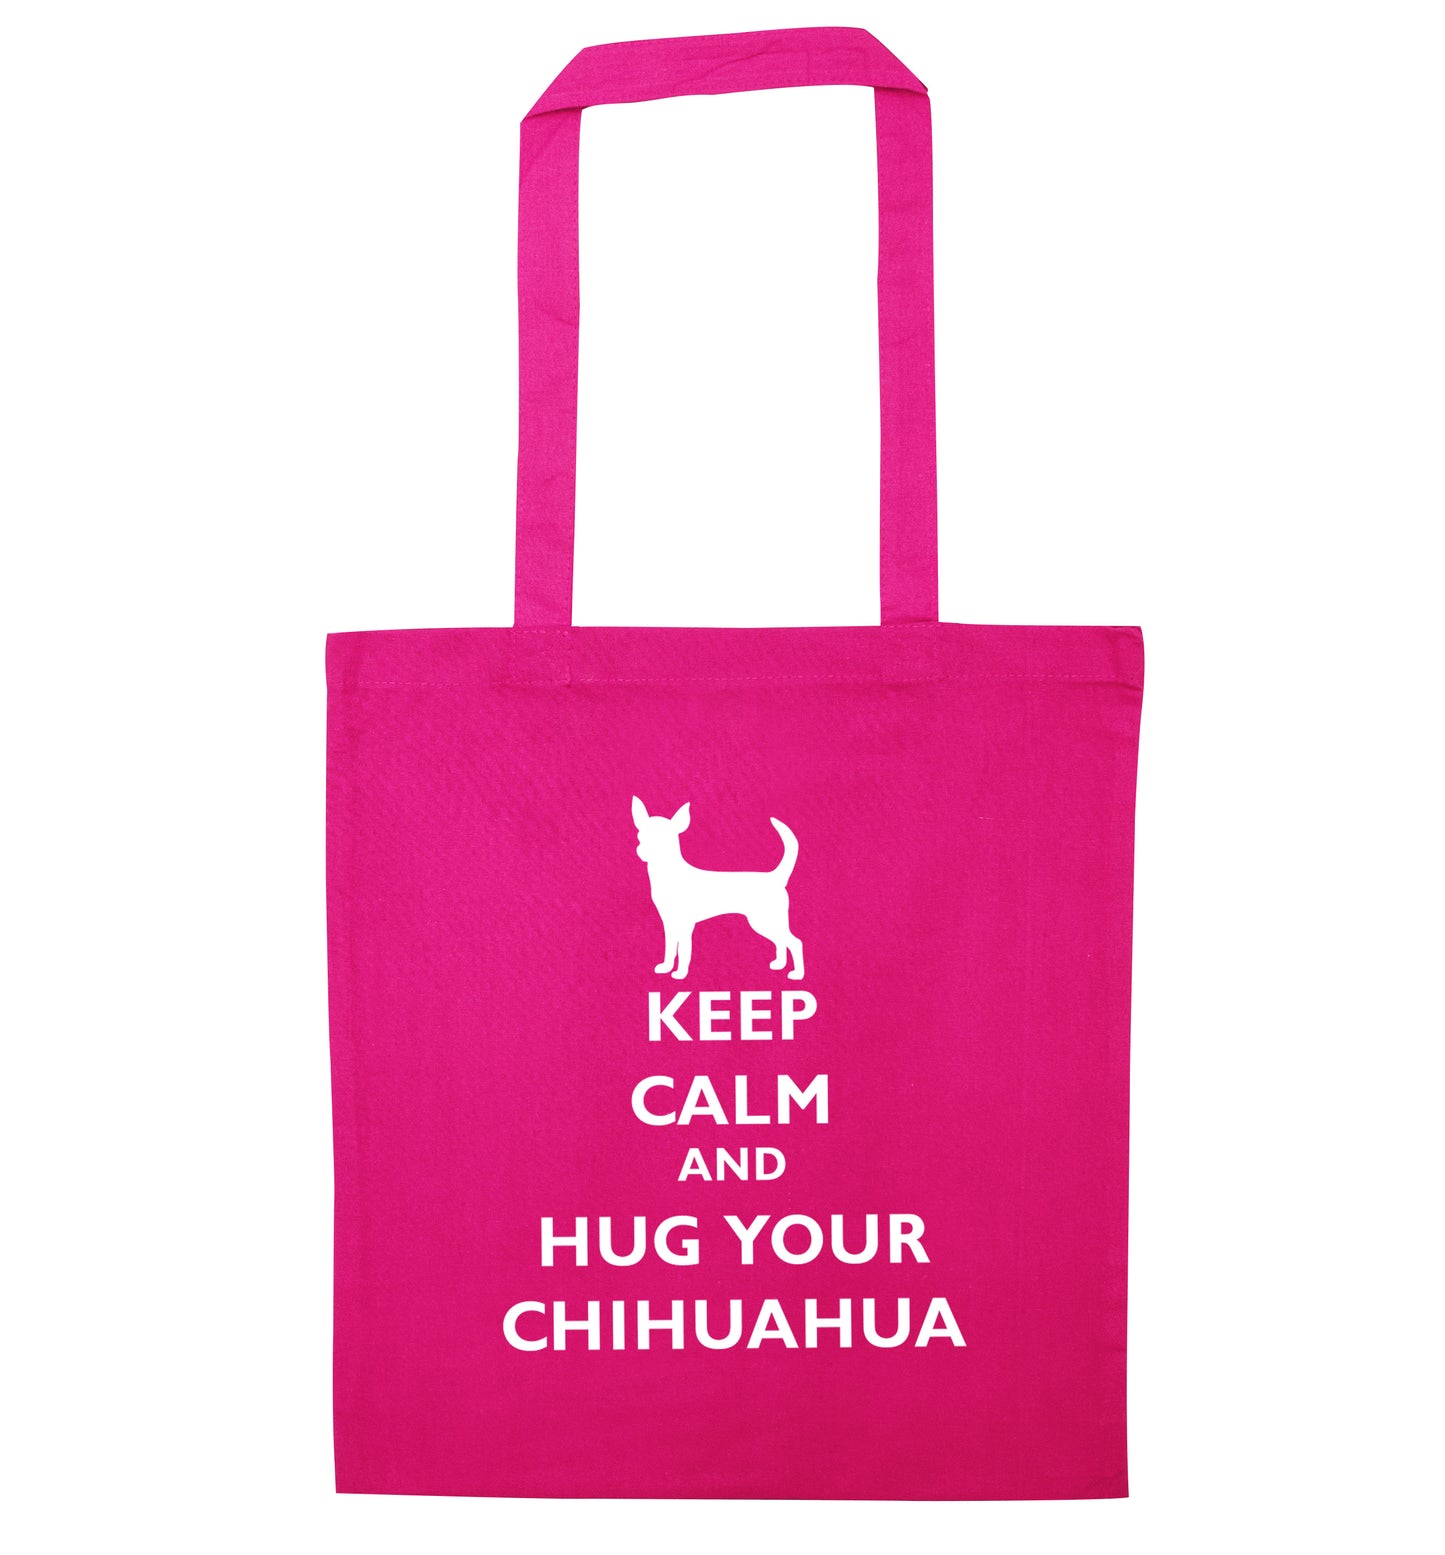 Keep calm and hug your chihuahua pink tote bag